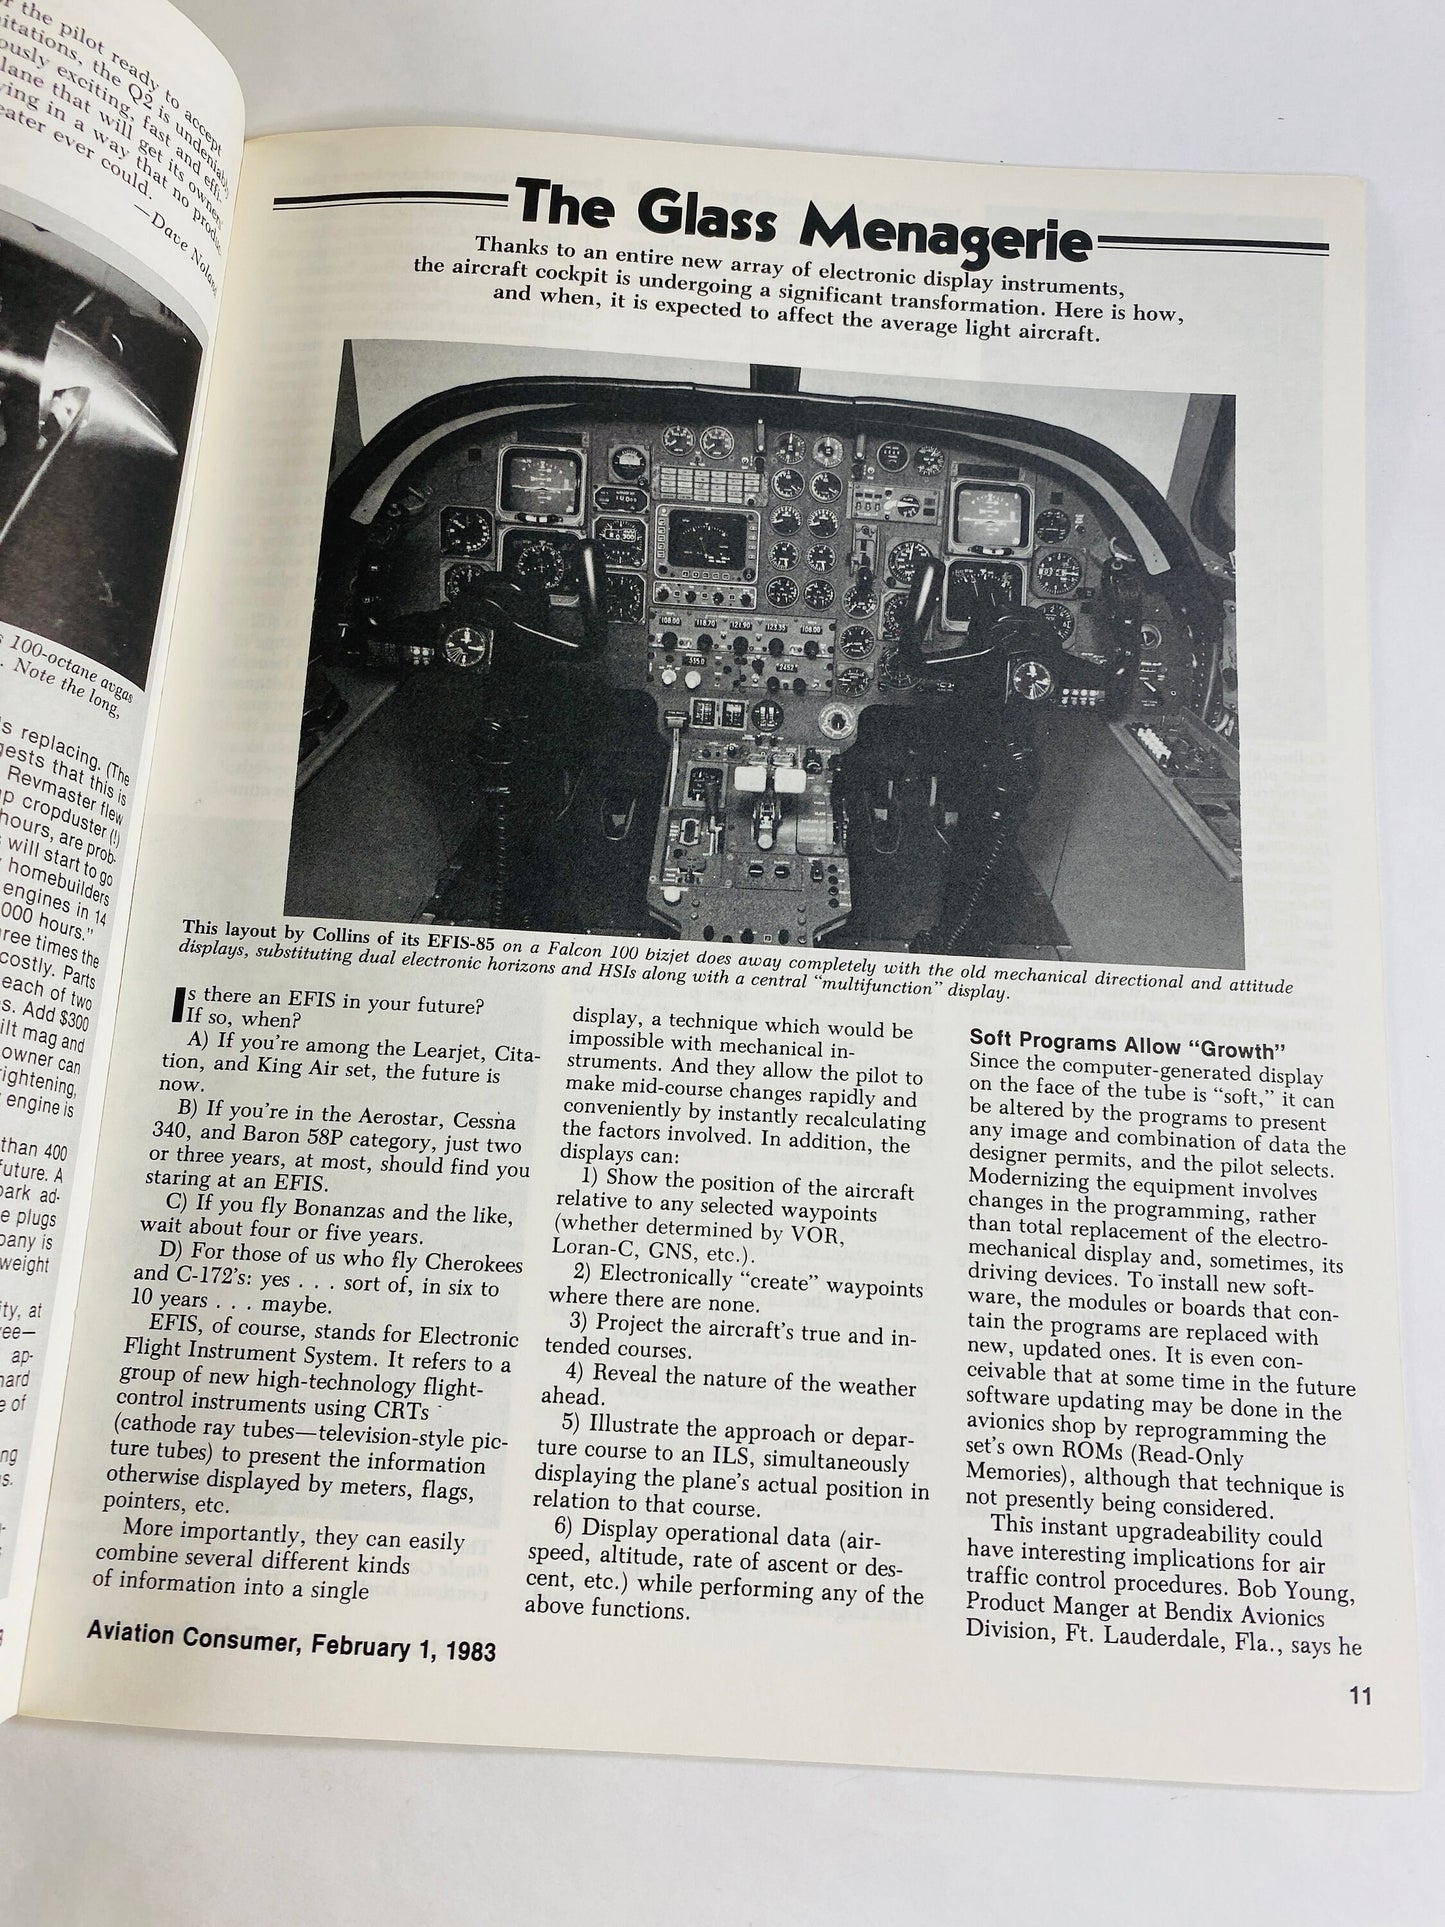 Aviation Consumer vintage magazine 1981 1983 FAA standards, turbo, lead fouling, locking fuel caps cockpit, Continental O-470